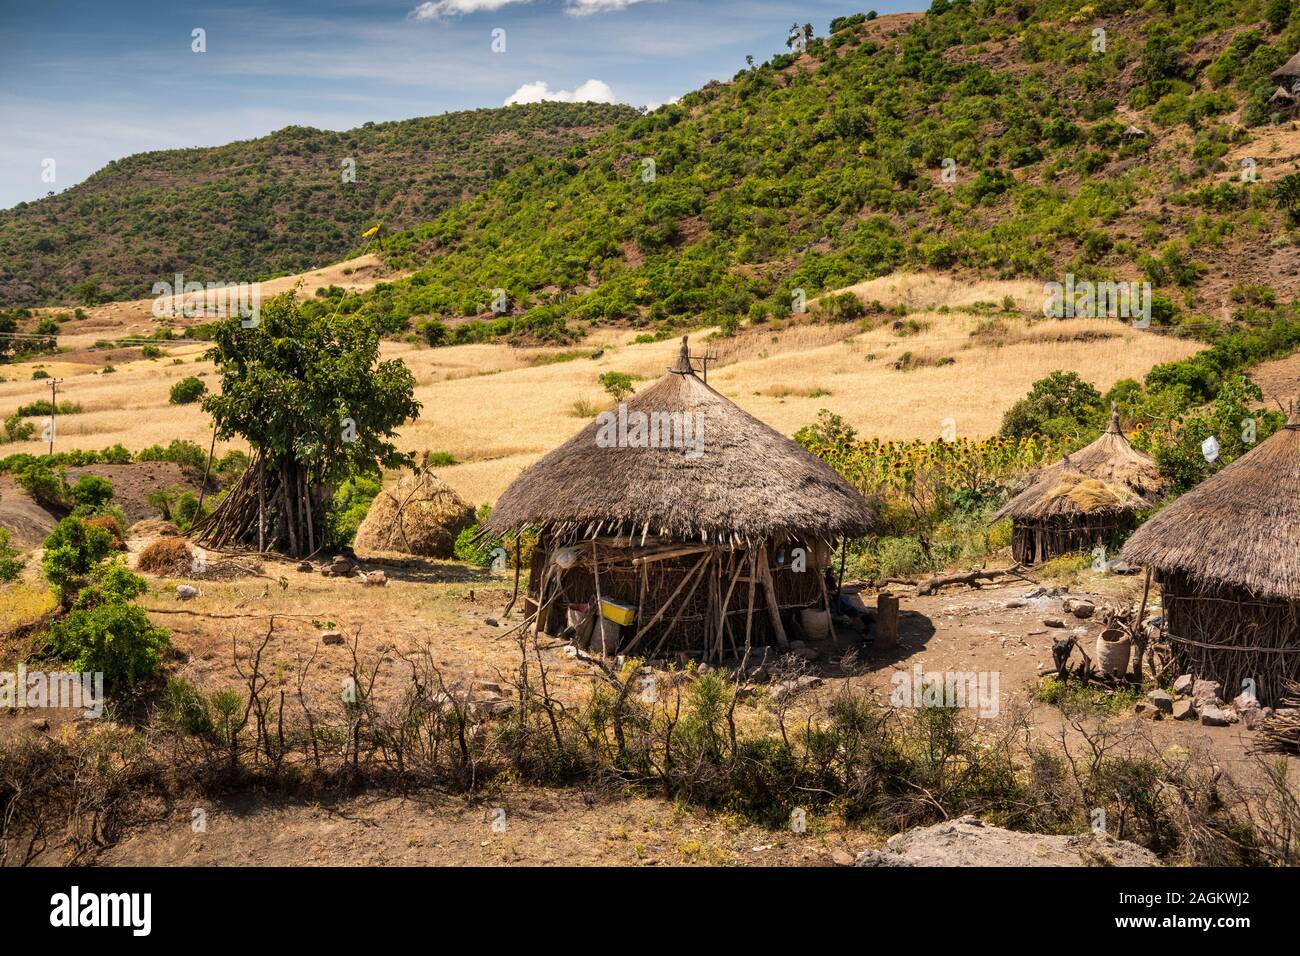 Ethiopia, Amhara Region, Lalibela, Bilbala, traditional circular thatched homes in small agricultural, village Stock Photo